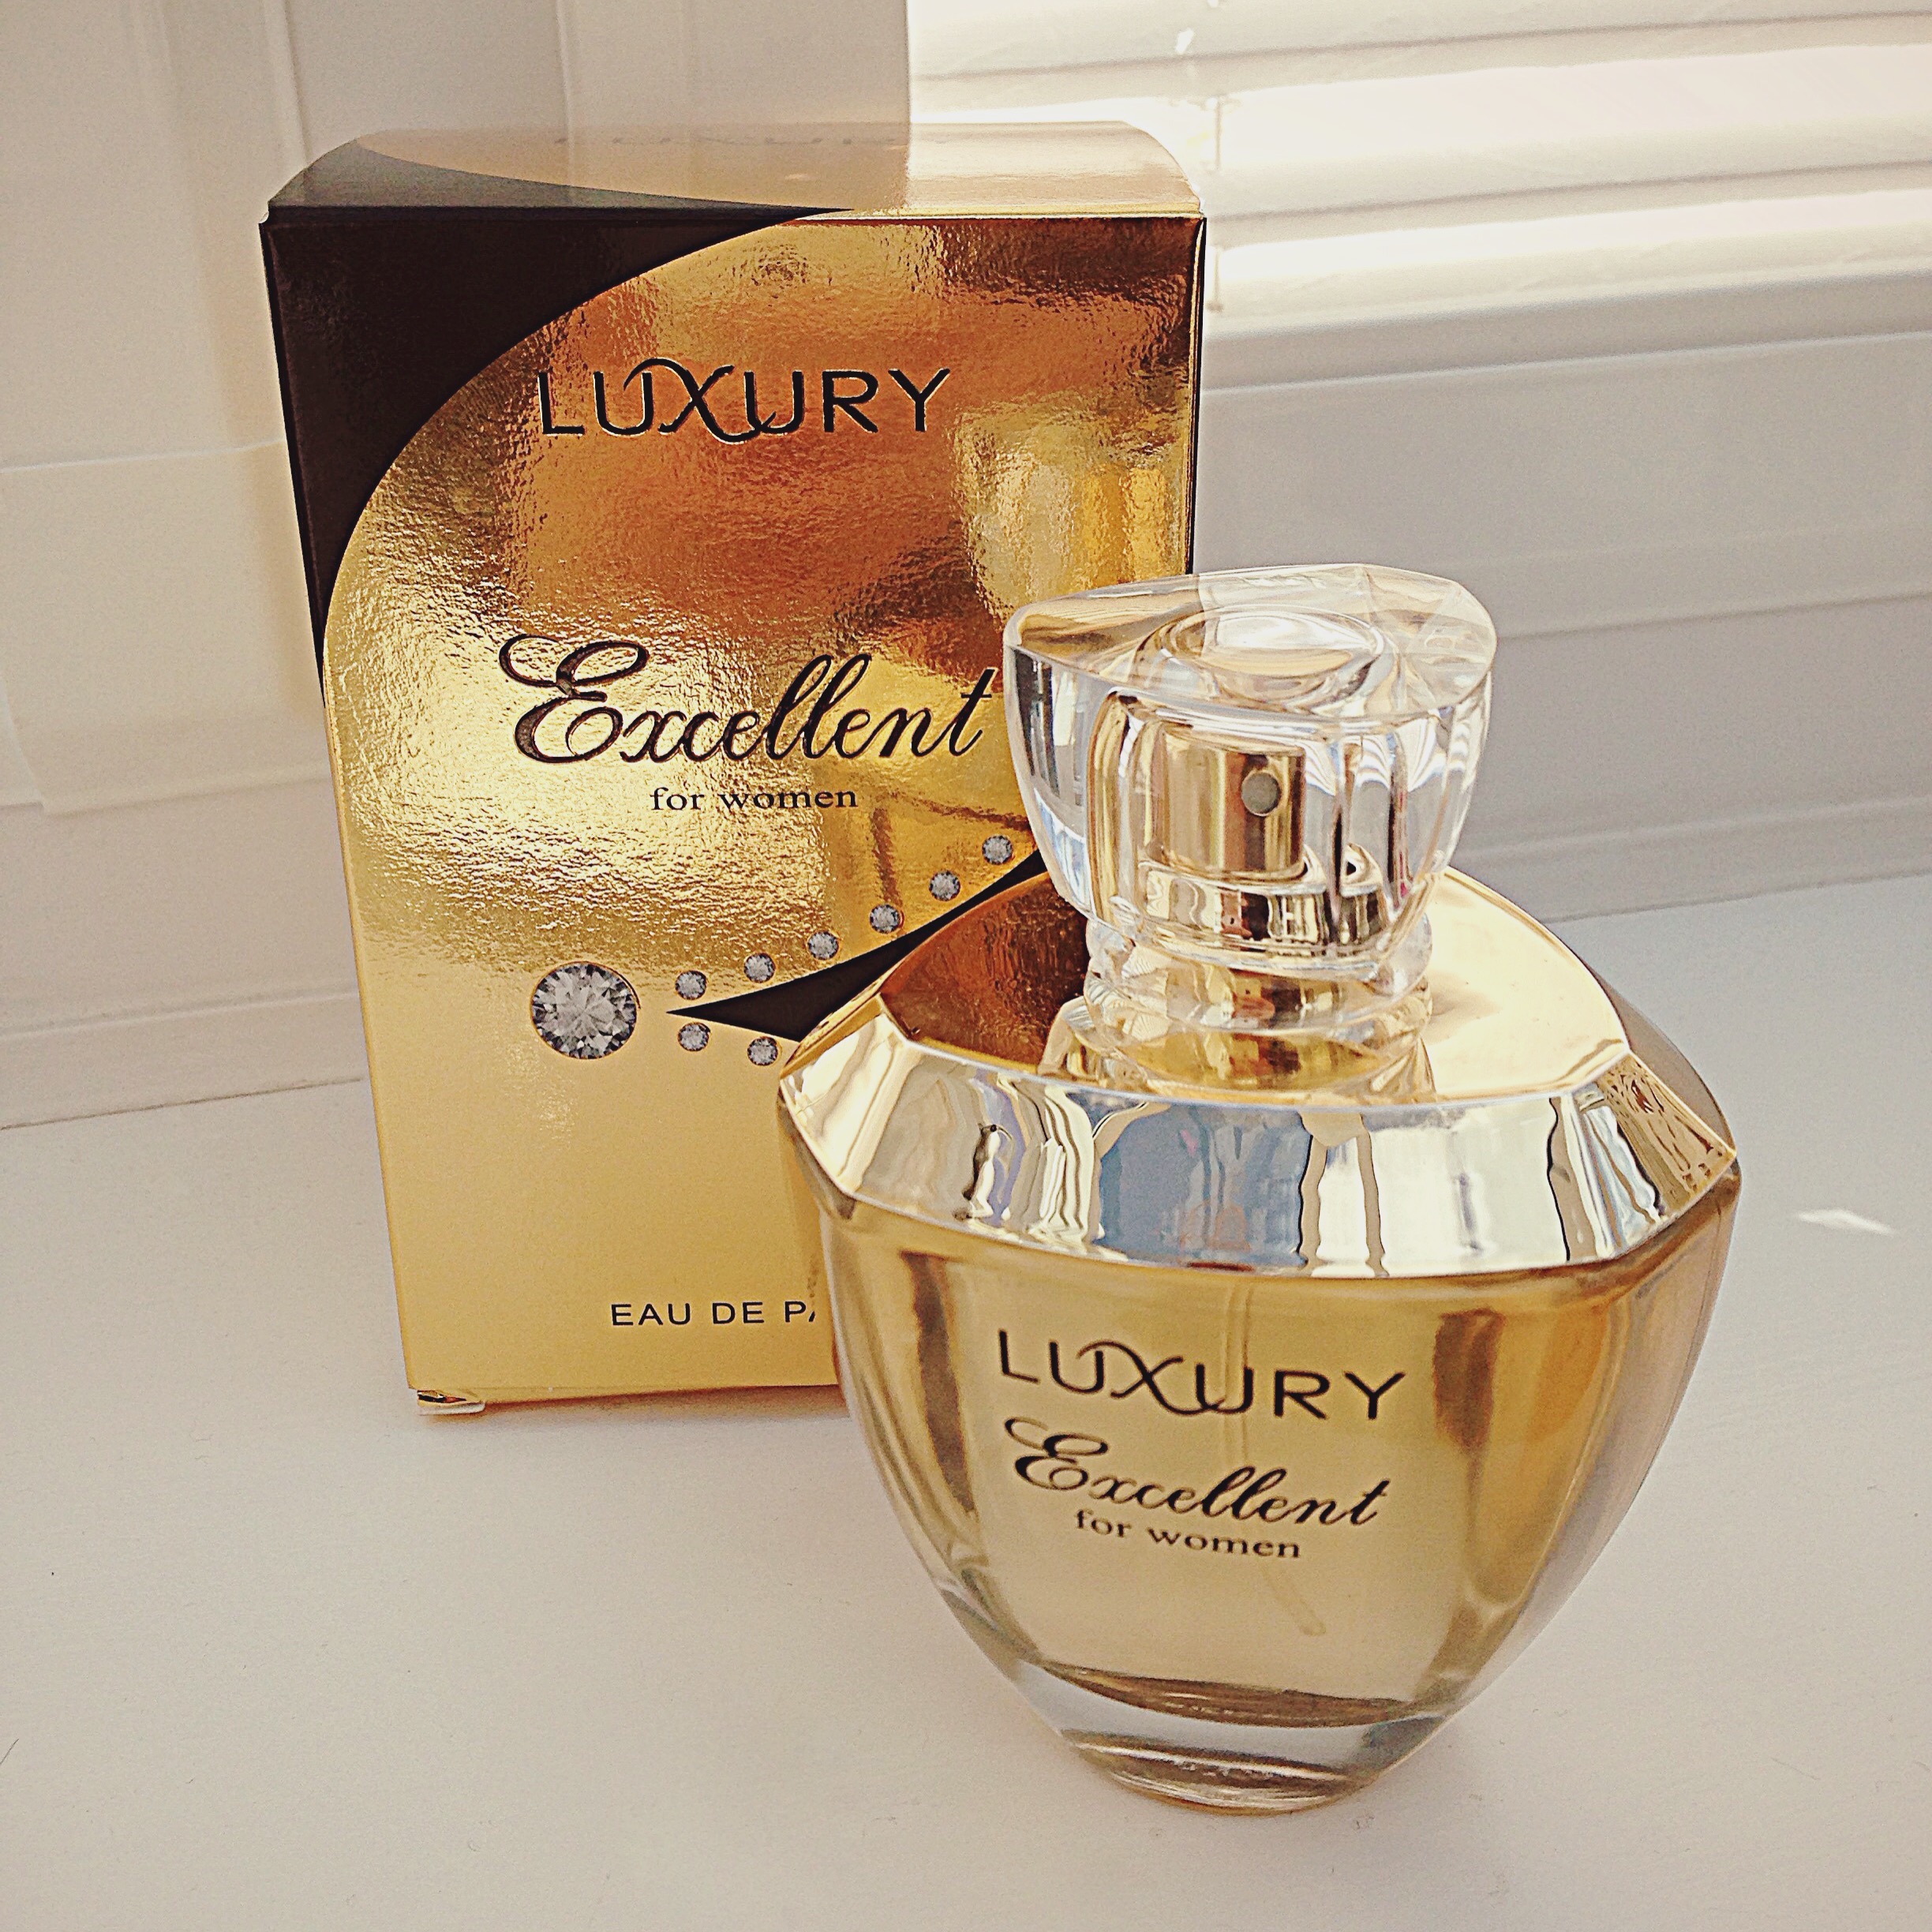 The £4.99 Lady Million Perfume dupe 